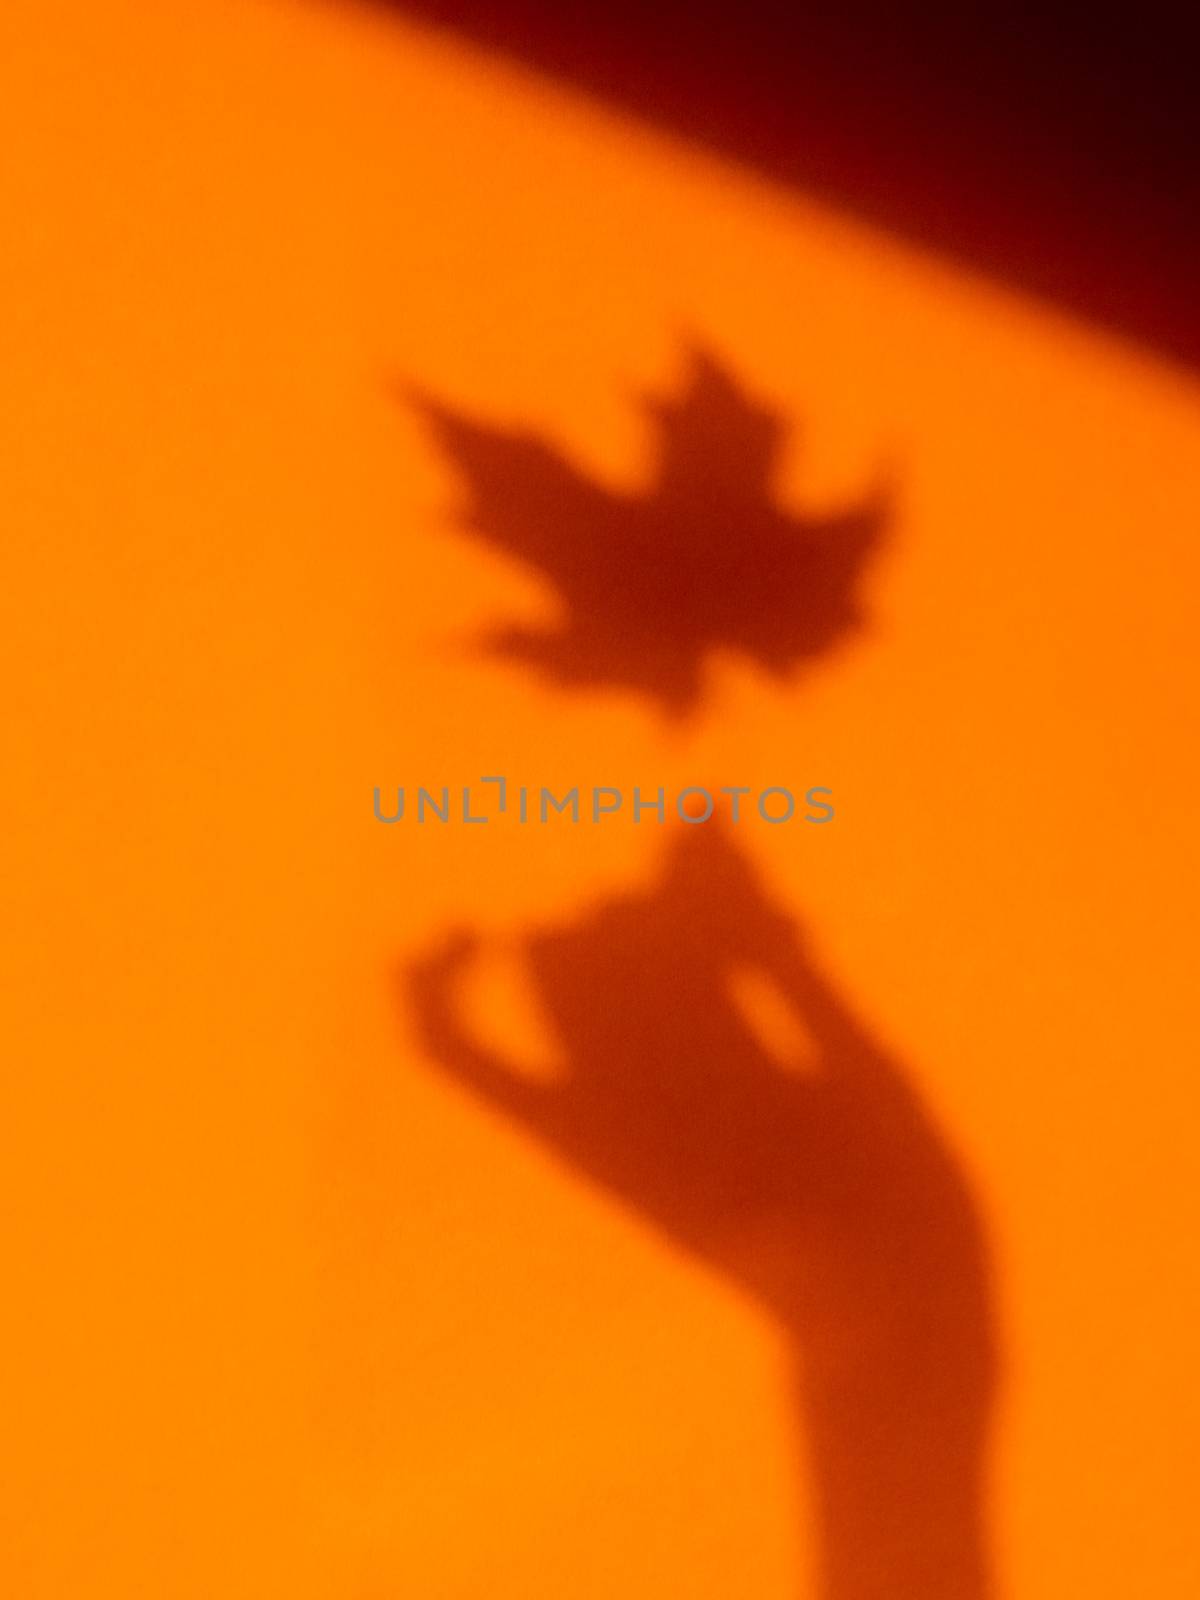 Shadows of woman hand with autumn maple leaf on bright orange wa by aksenovko